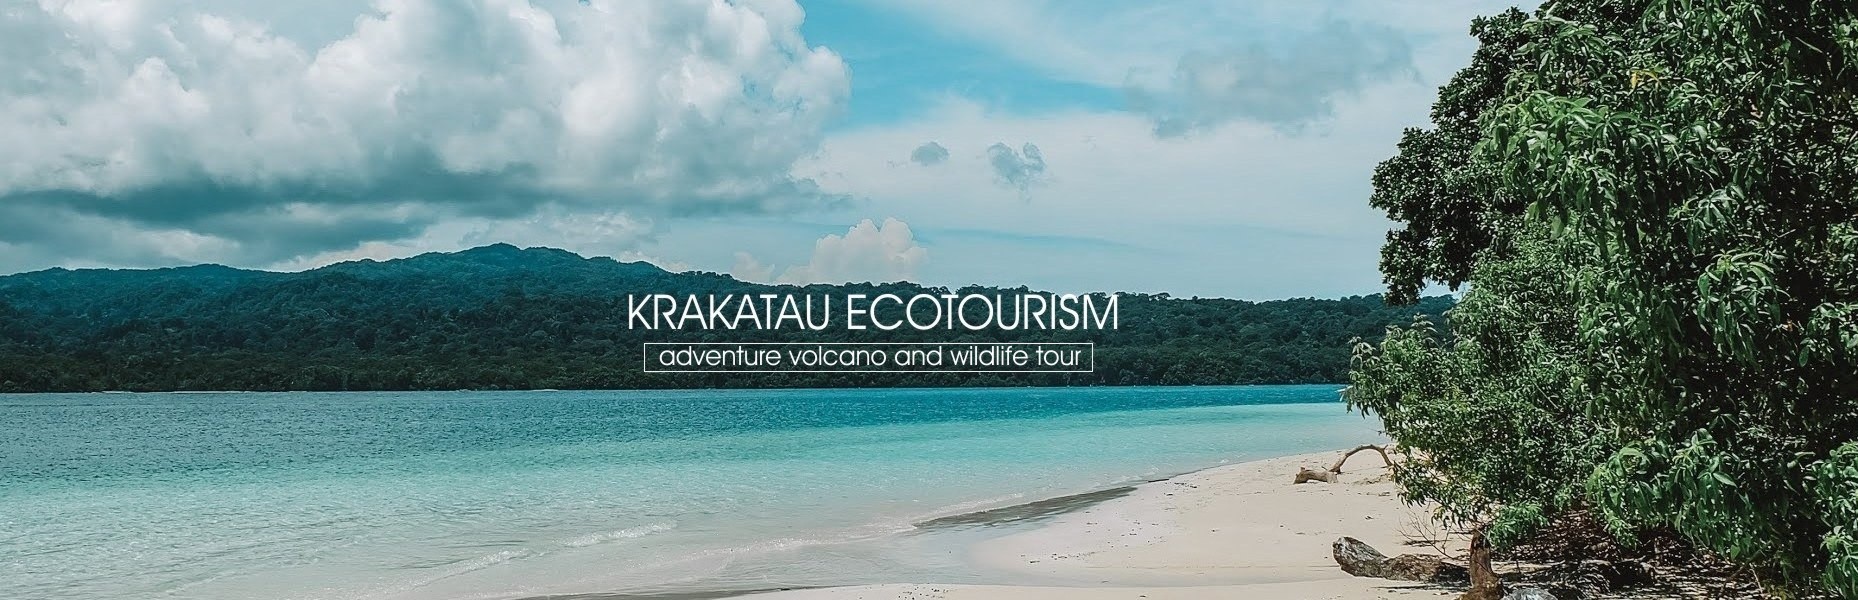 krakatauecotourism